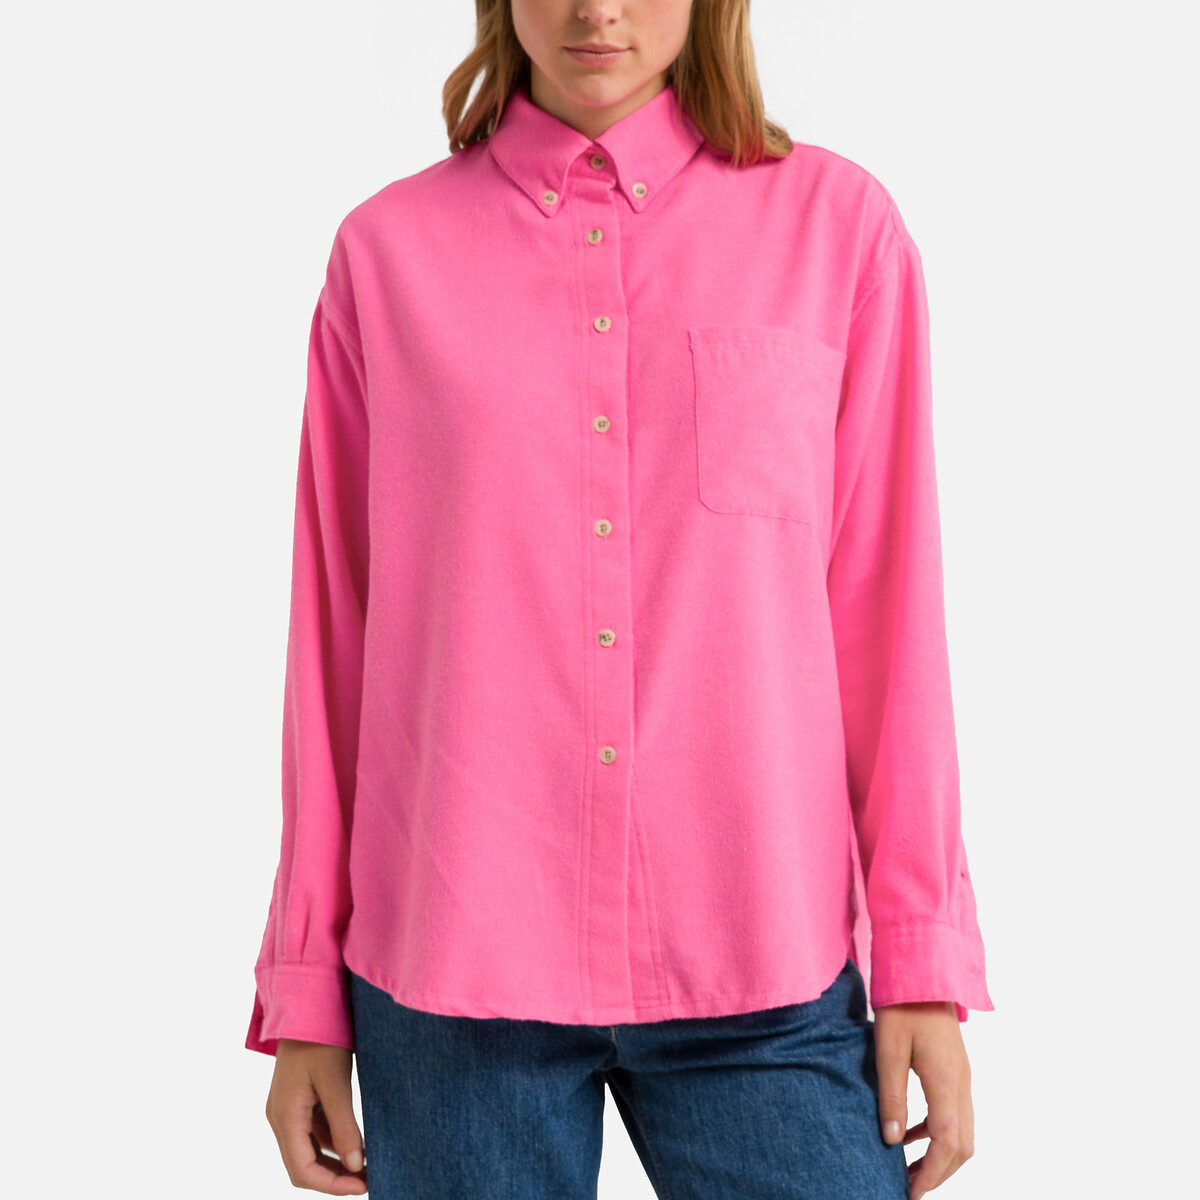 Dakota Sateen Boyfriend Shirt in Cotton Mix with 3/4 Length Sleeves